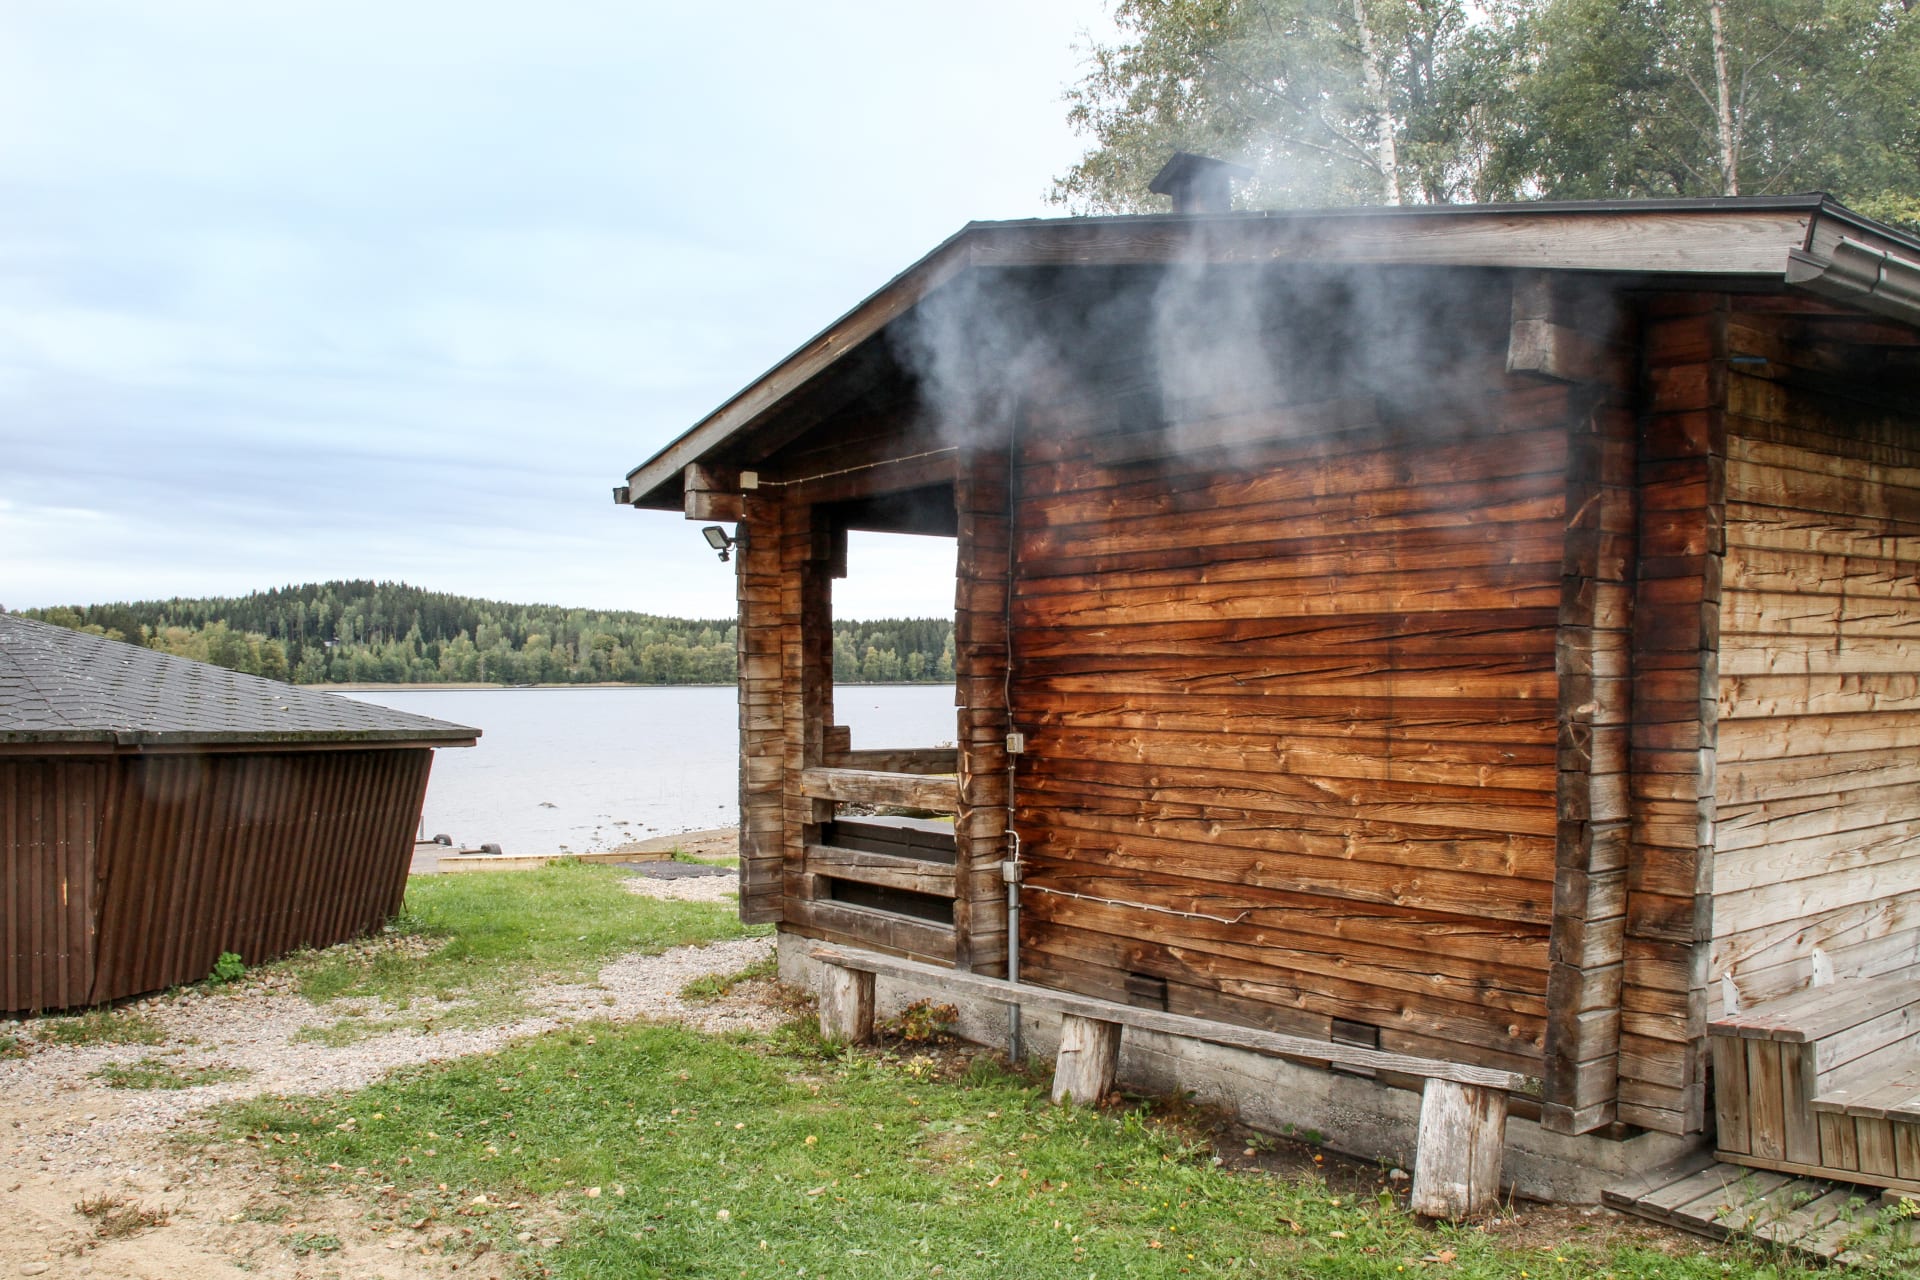 Smoke Sauna